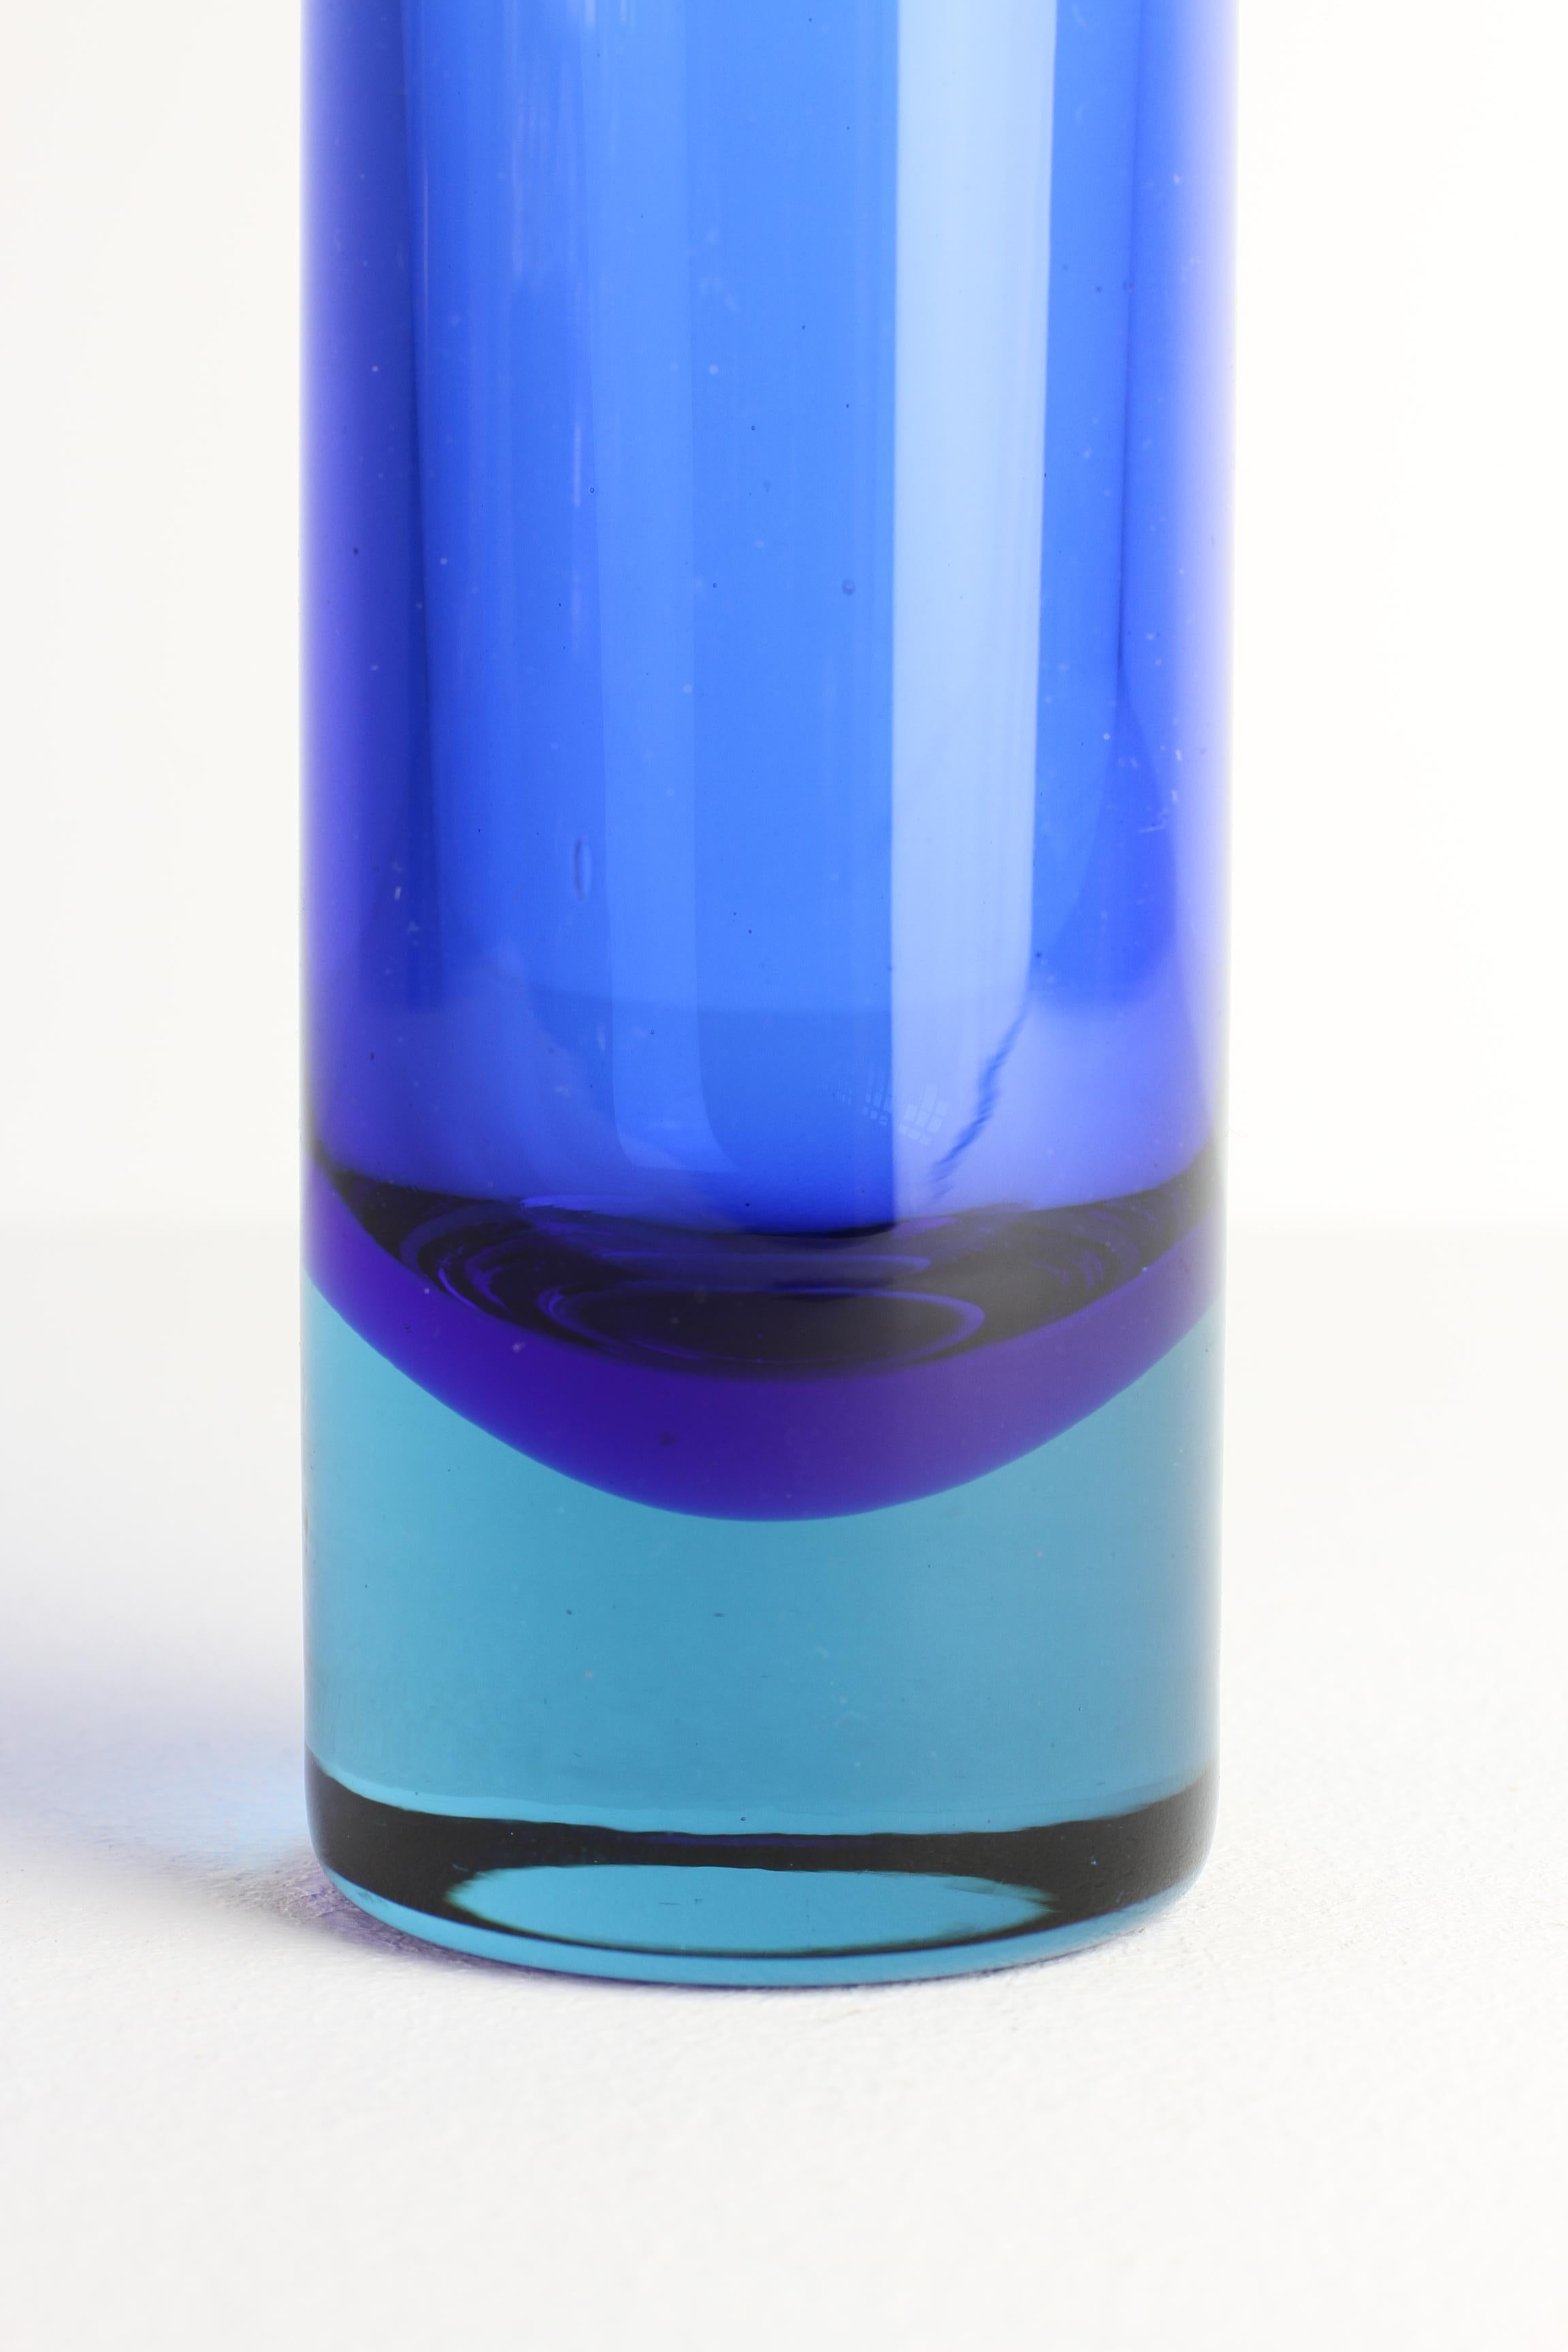 Blown Glass Flavio Poli Style Tall Blue Murano Glass 'Sommerso' Vase, circa 1970s